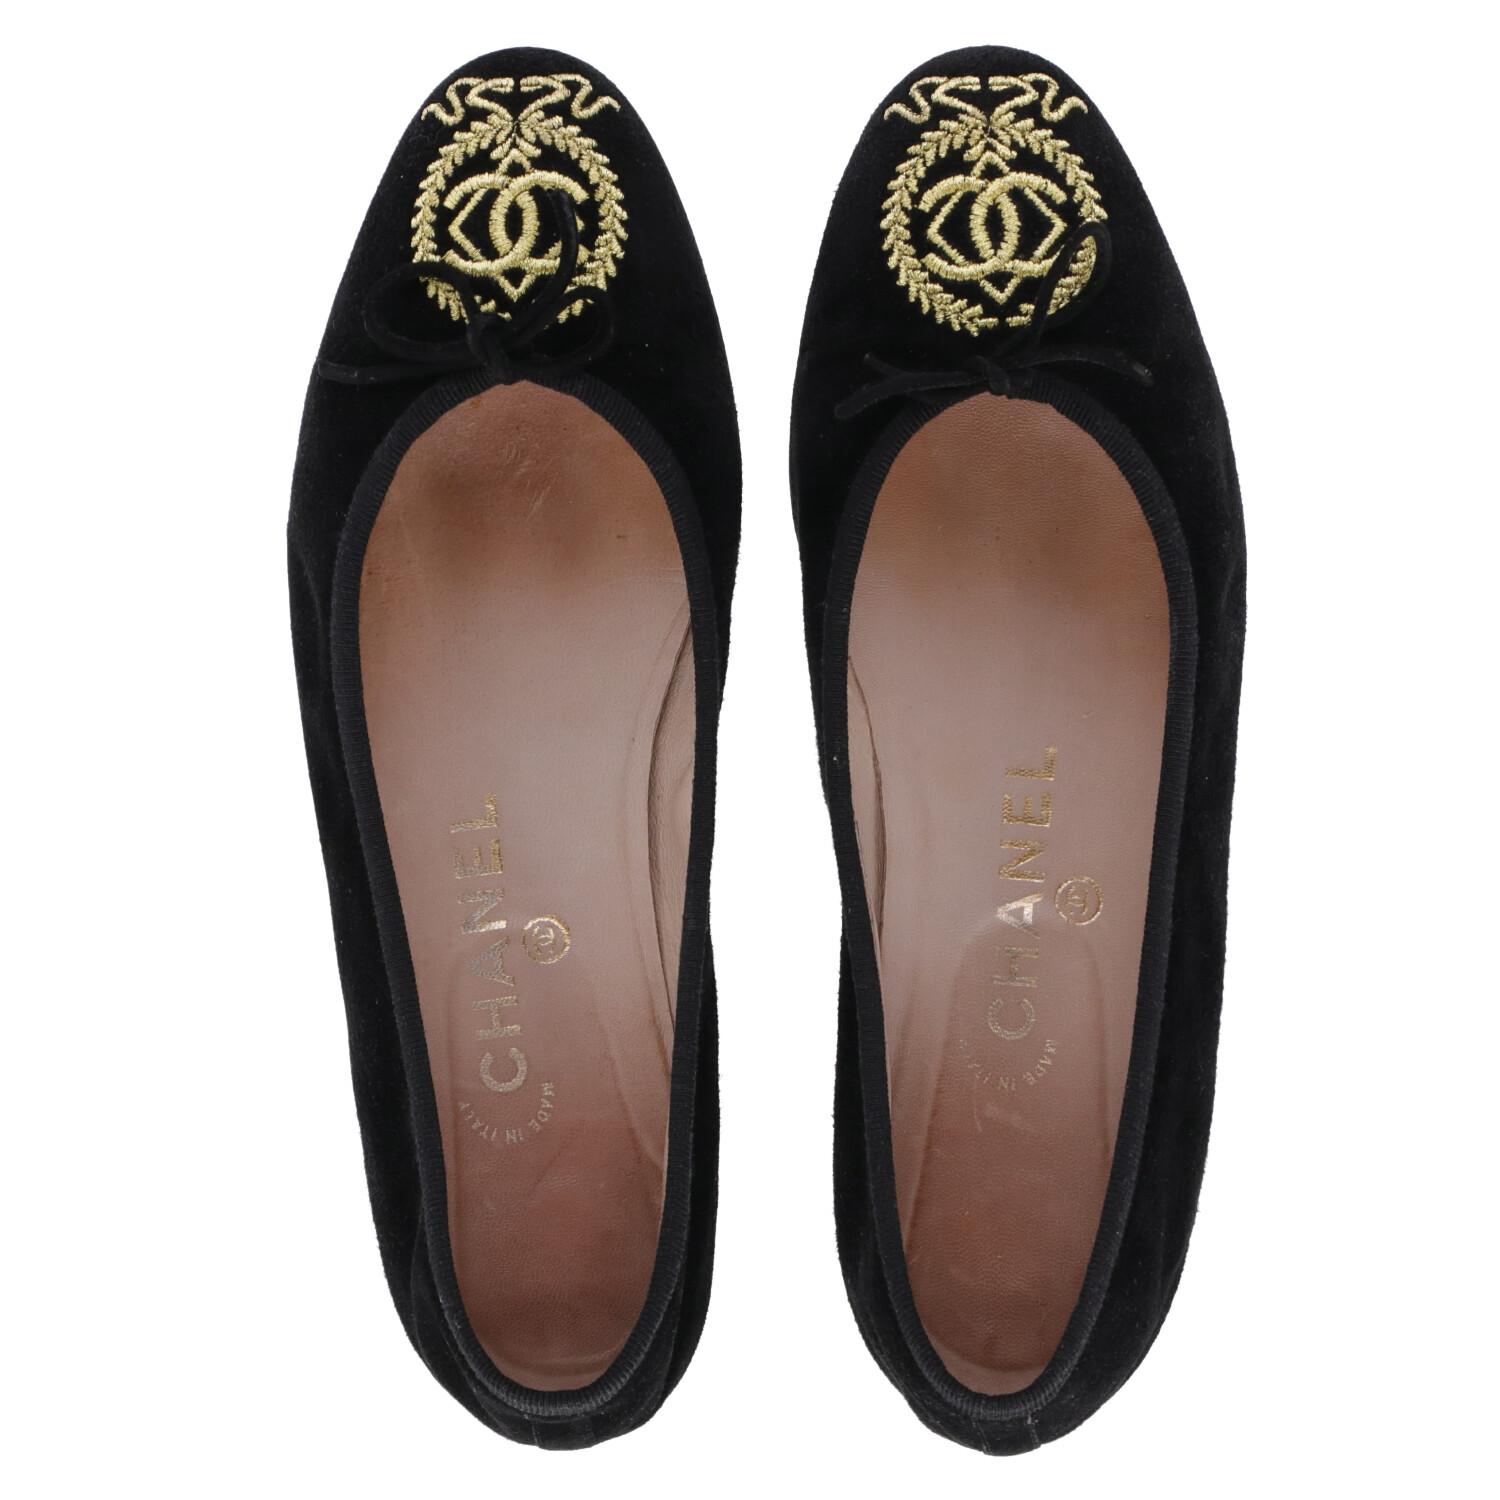 2010s Chanel Vintage Black Suede Ballerinas with Golden Logo 4